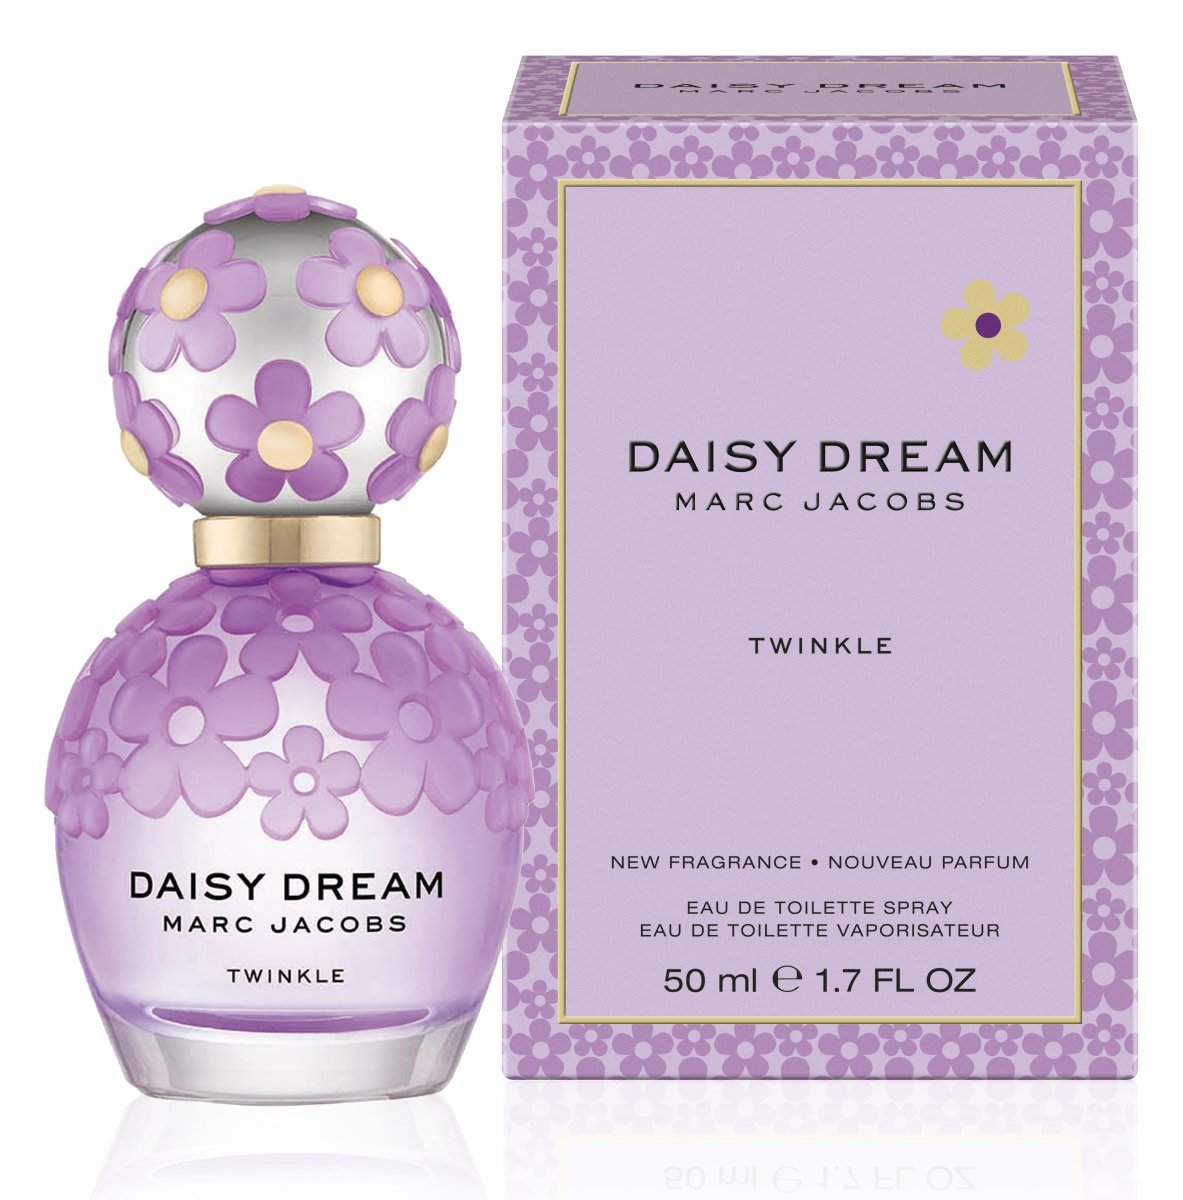 Marc Jacobs Daisy Dream Twinkle